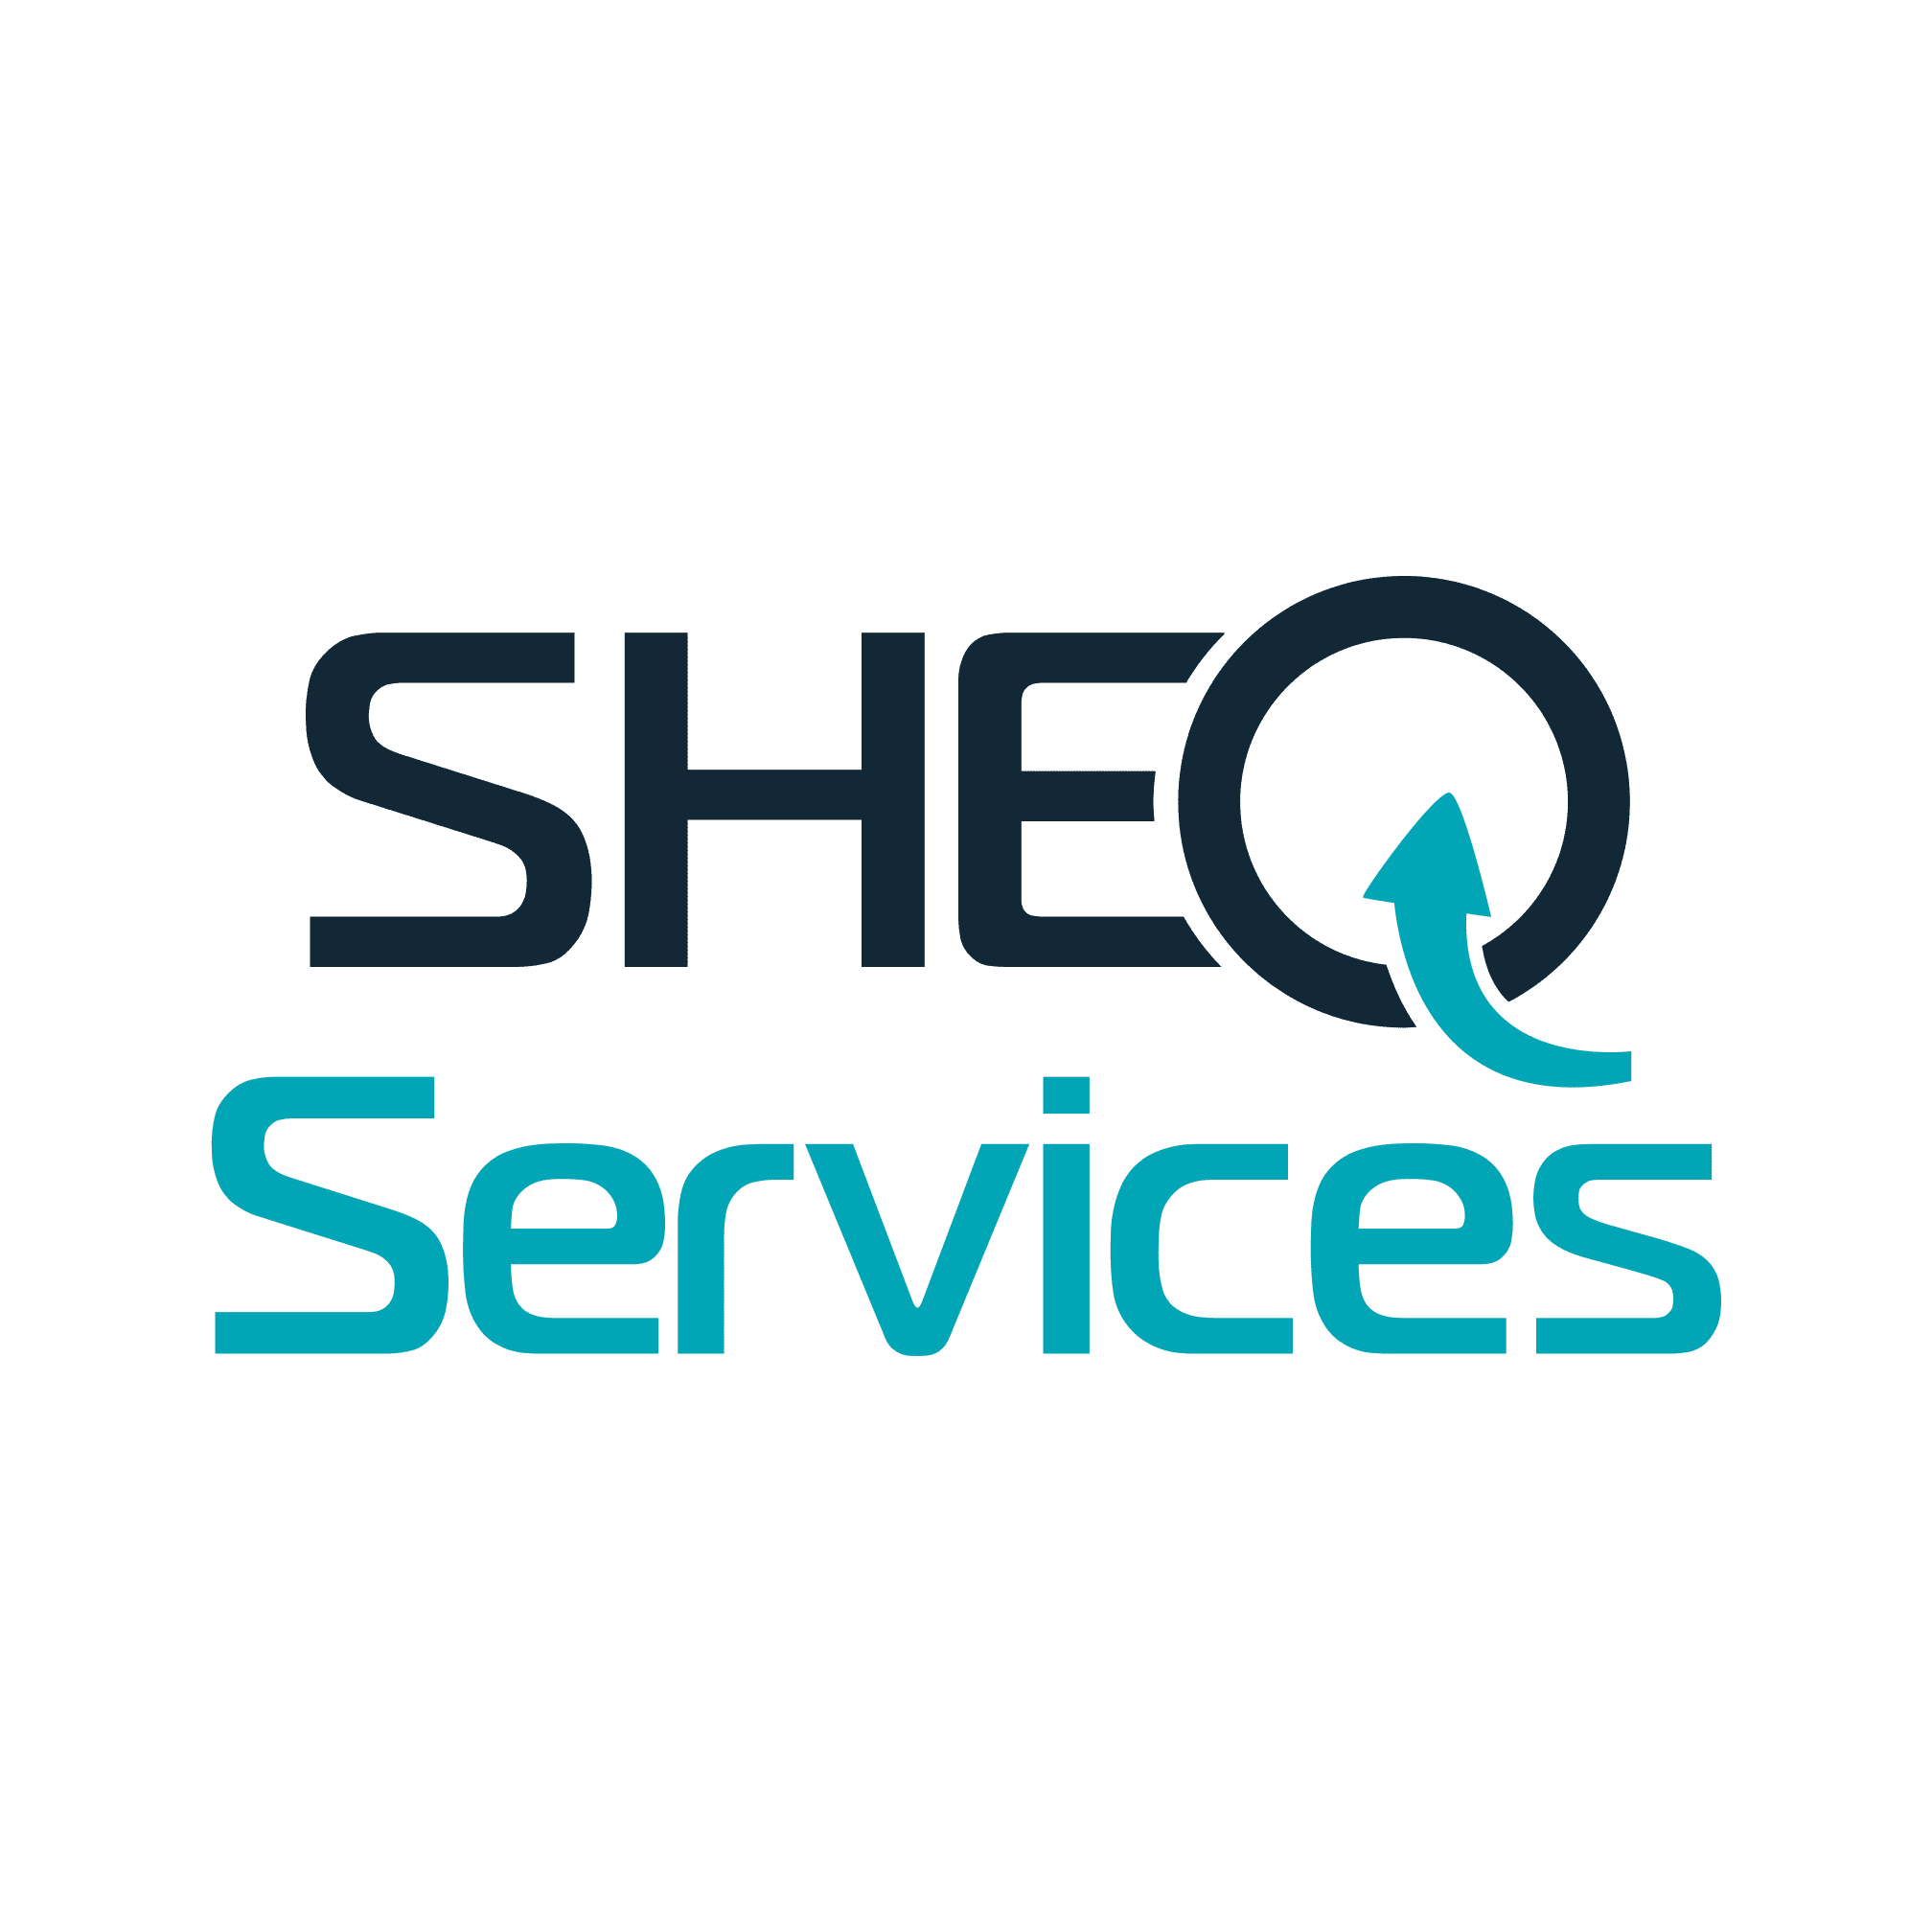 SHEQ Services Logo